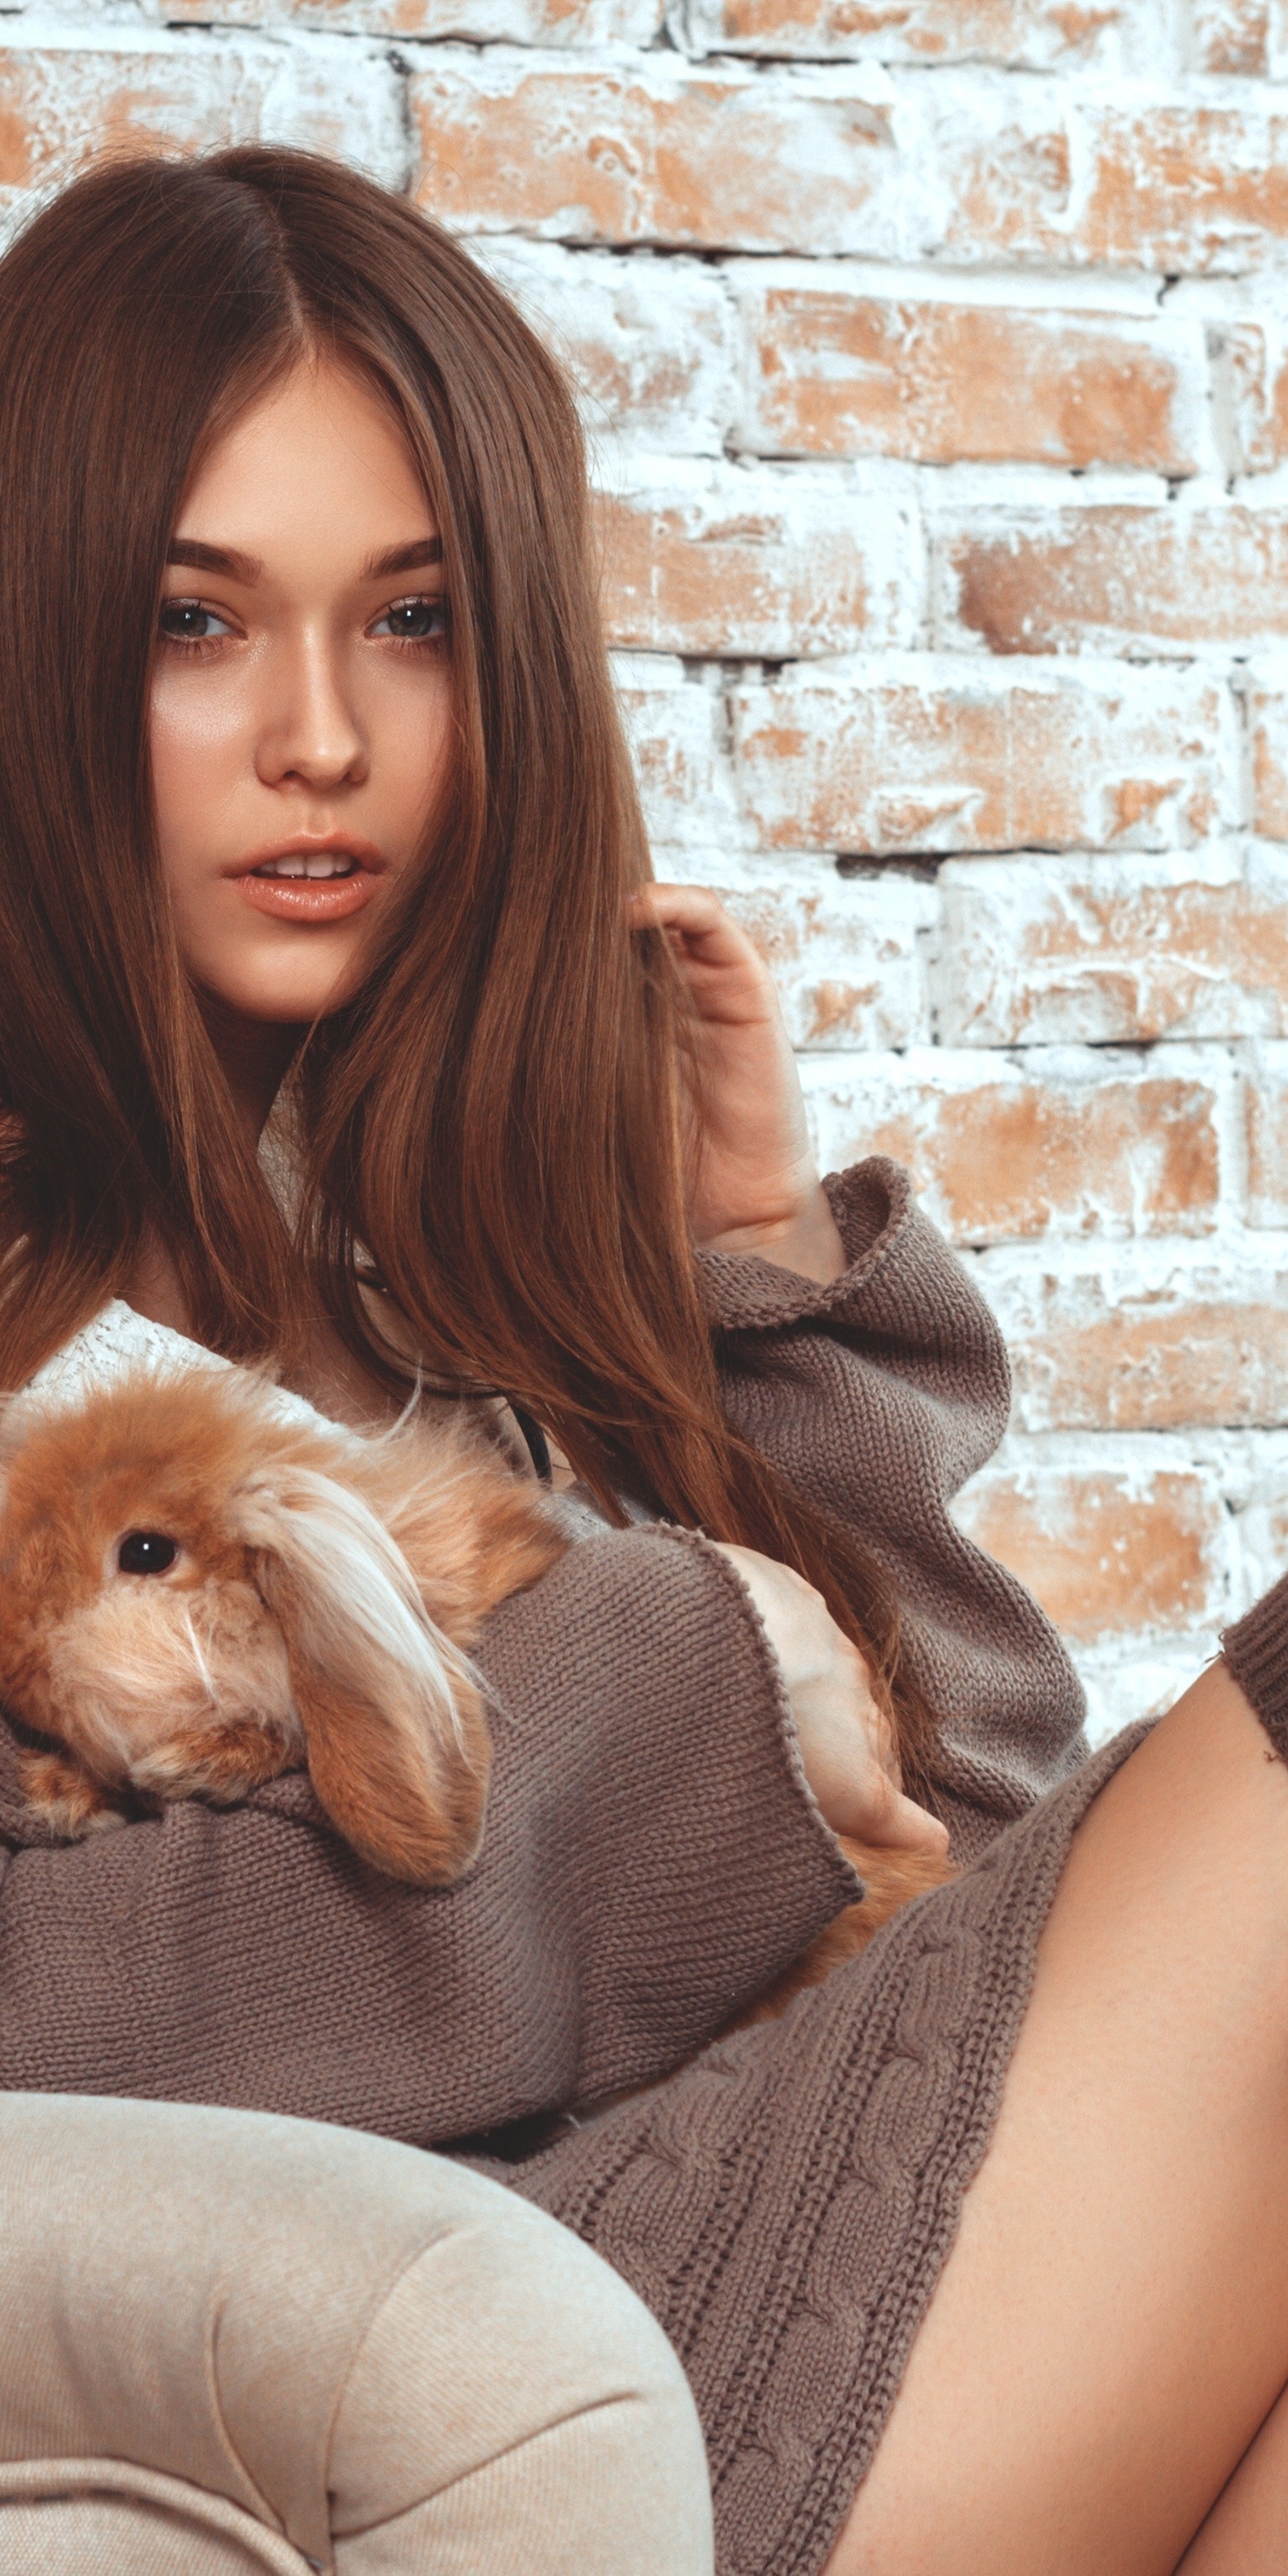 Image: Brunette, girl, long hair, rabbit, sitting, armchair, brick wall